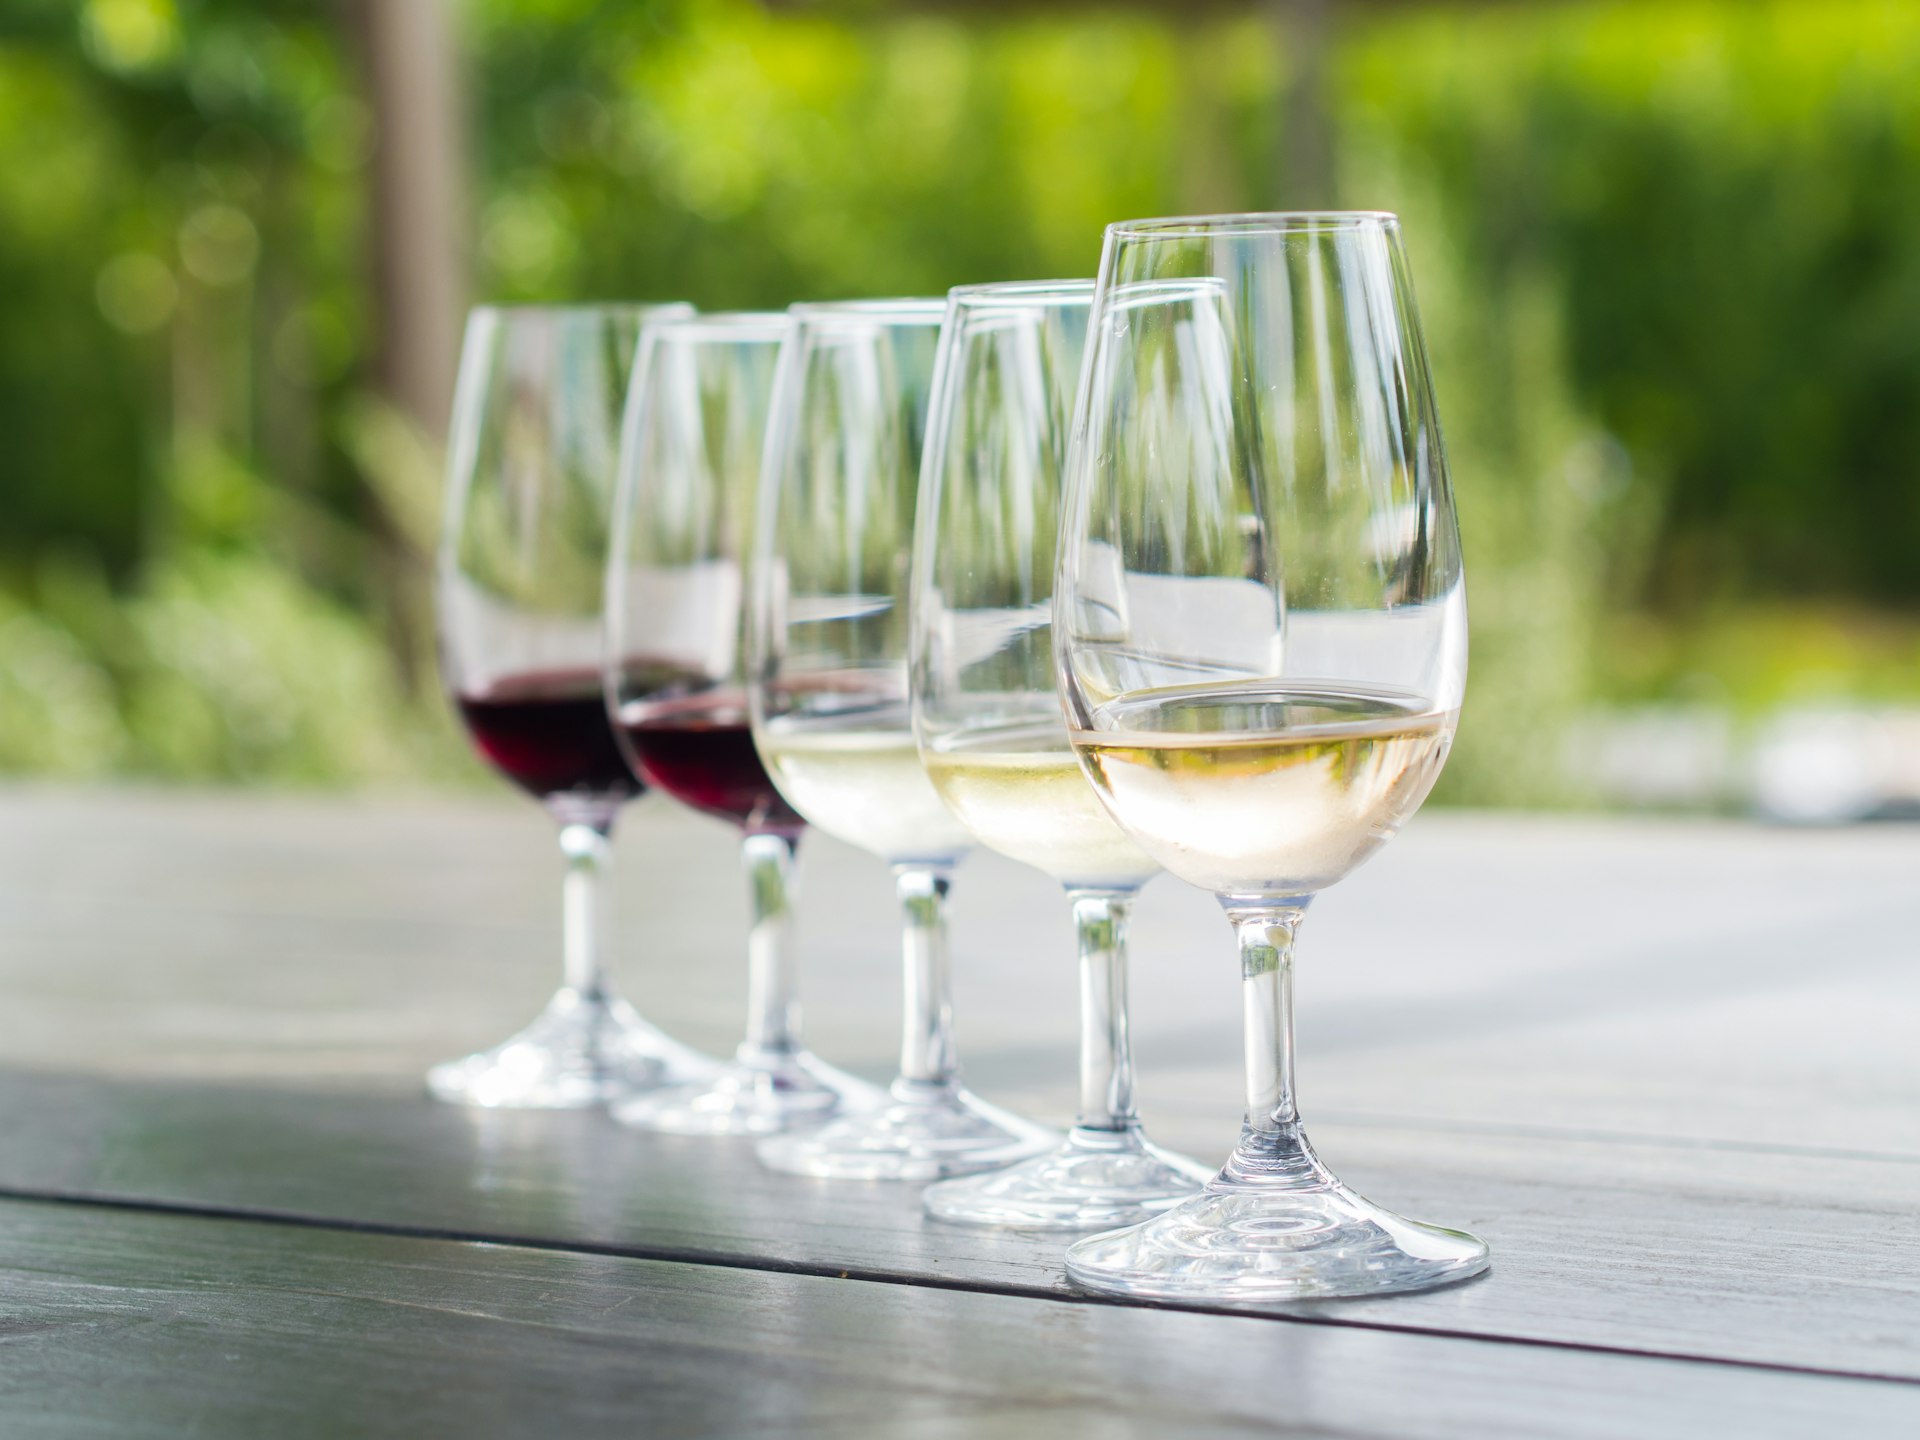 Glasses of blanc de noir, chardonnay, sauvignon blanc, merlot, and cabernet sauvignon set up for a wine tasting in Stellenbosch, South Africa